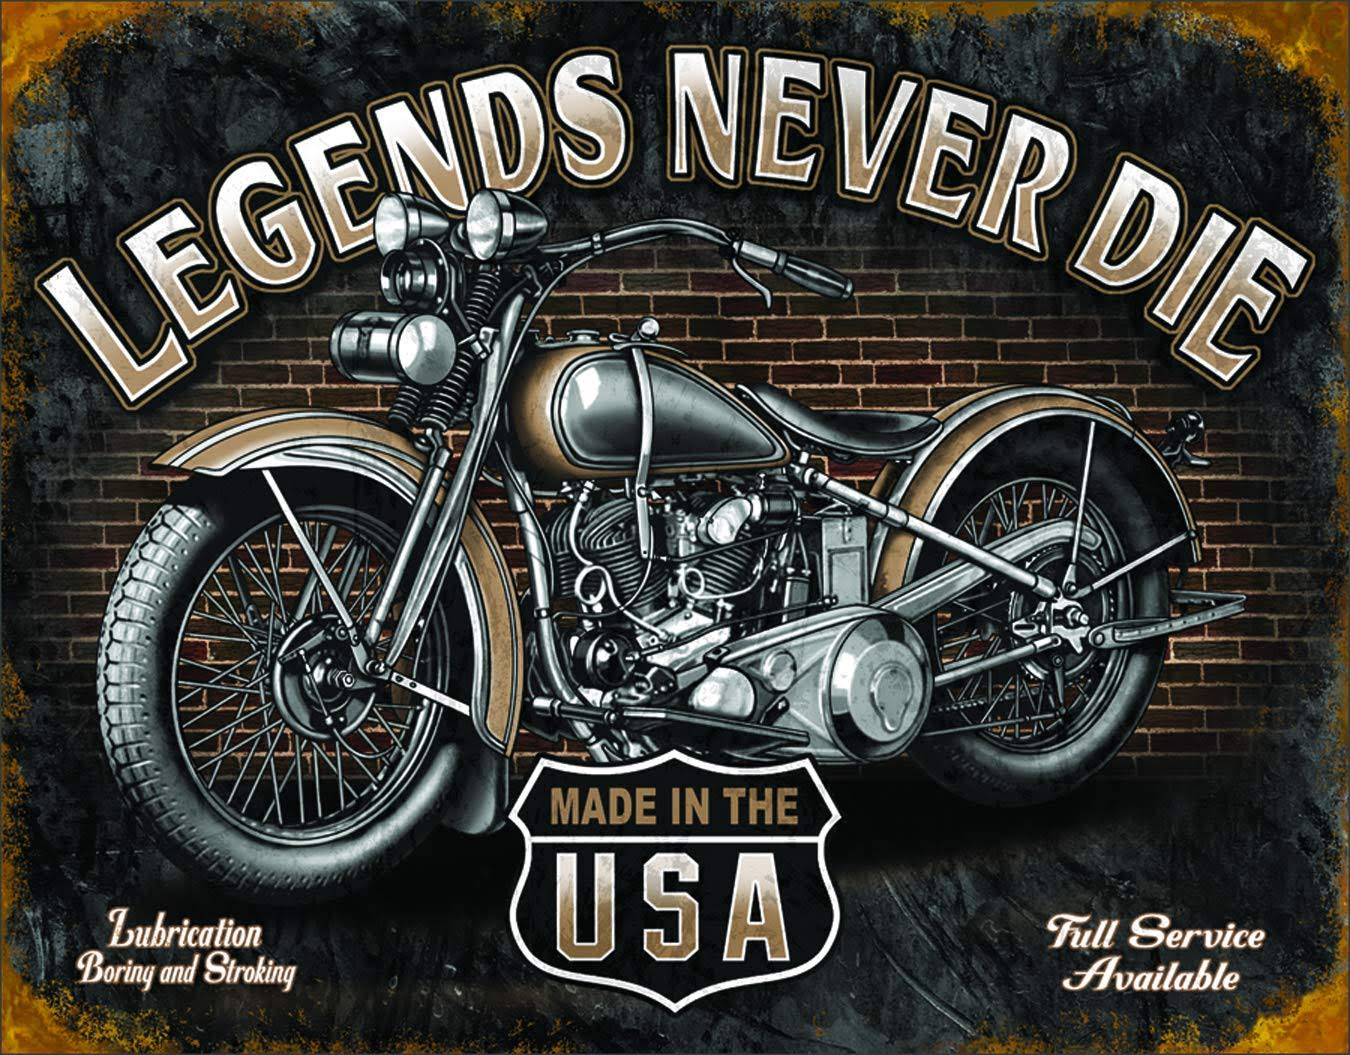 Desperate Enterprises Legends Never Die Biker Tin Sign - 31cm x 40cm